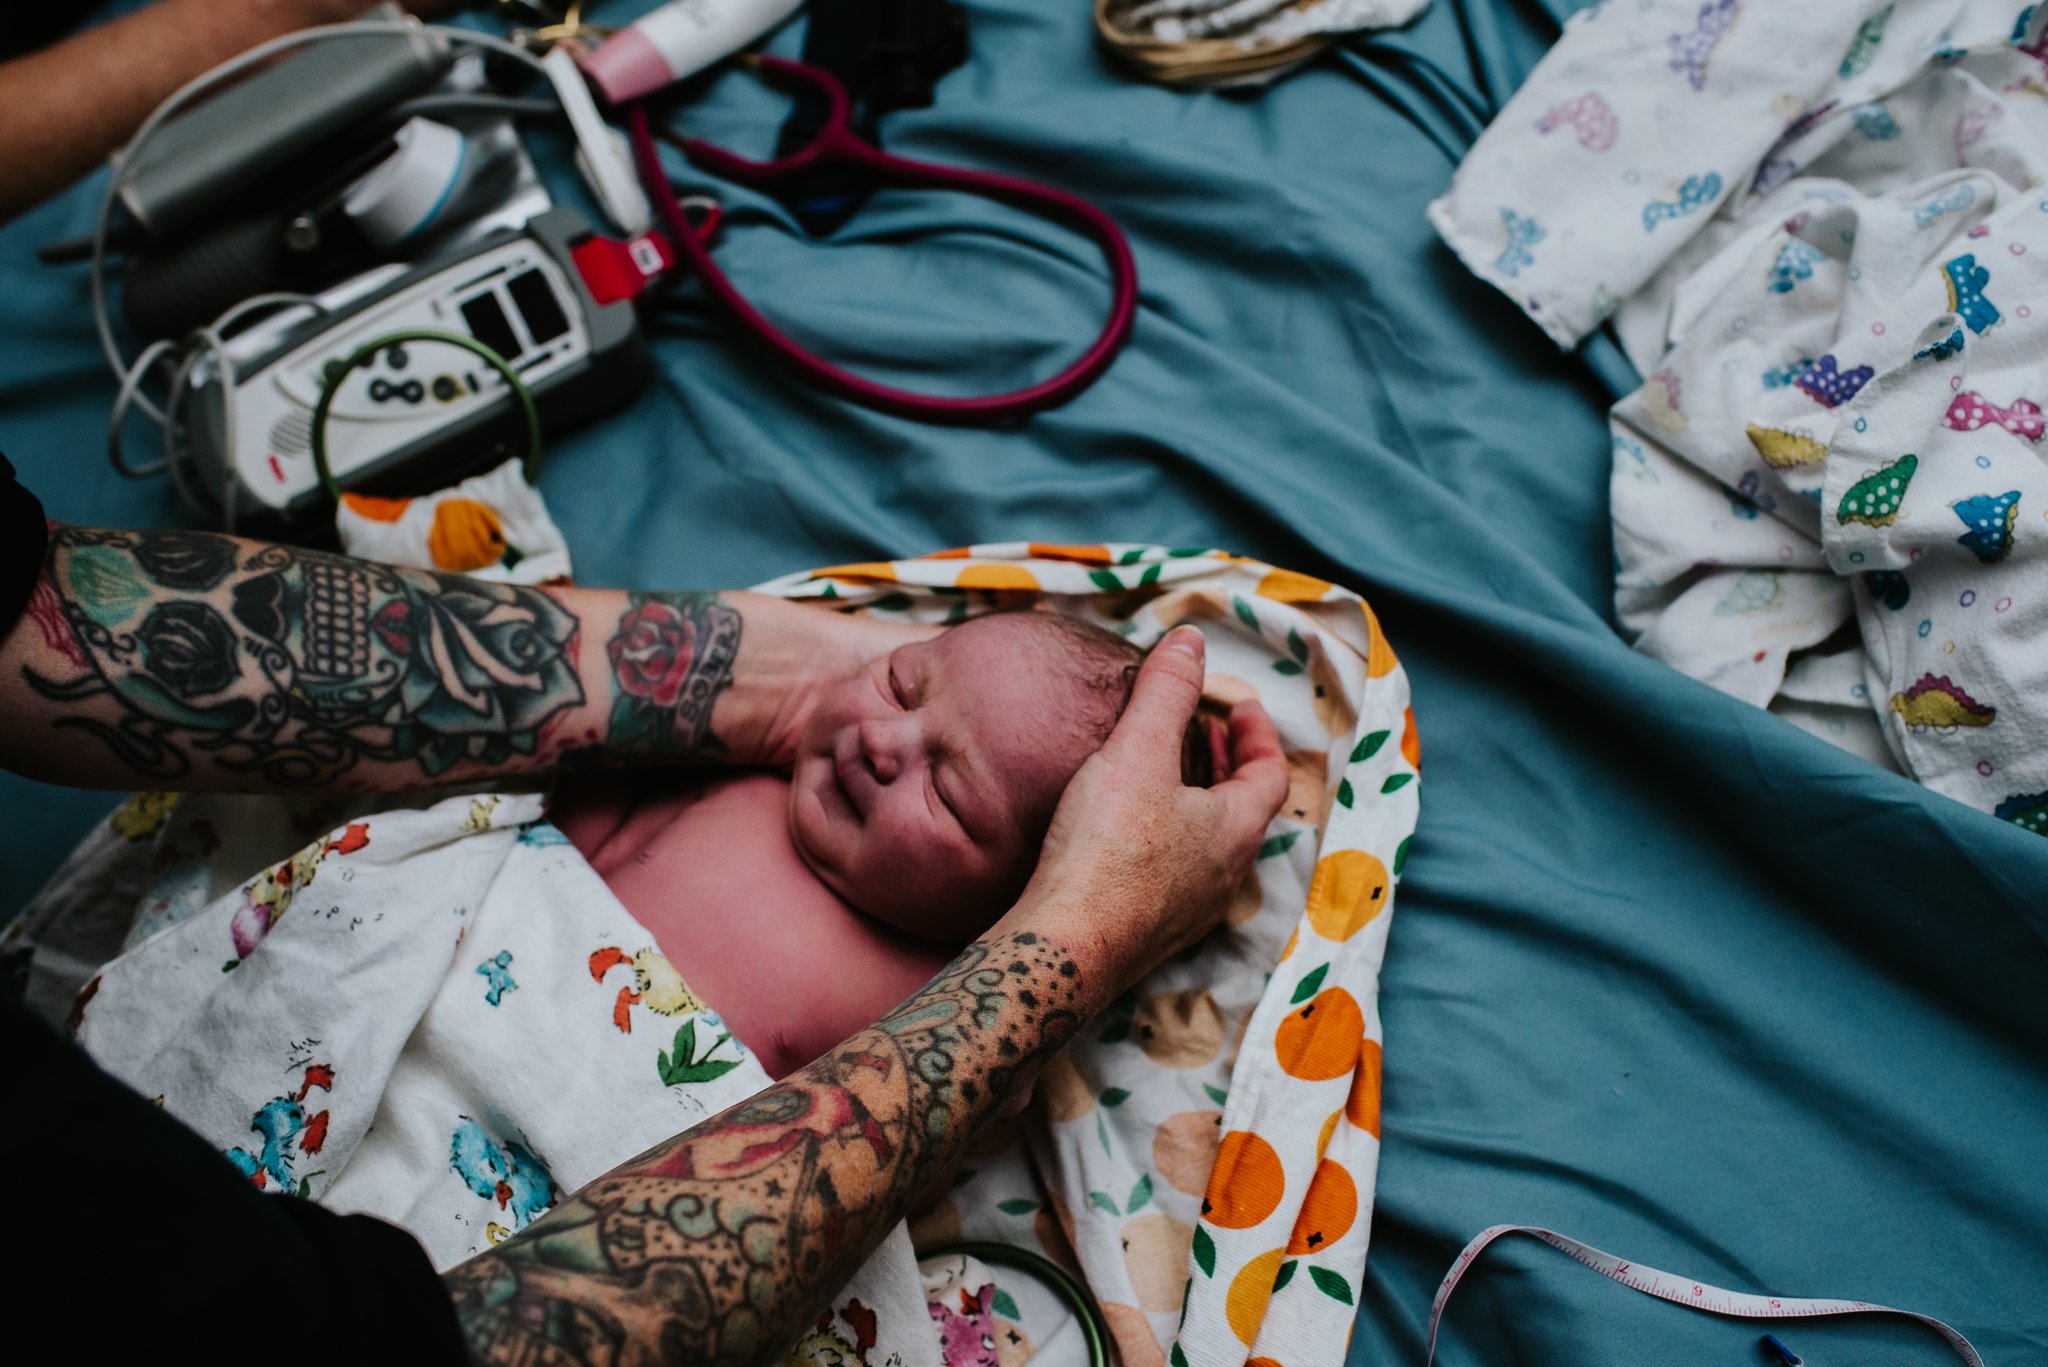 touch-newborn-homebirth-exam-pennsylvania.jpg